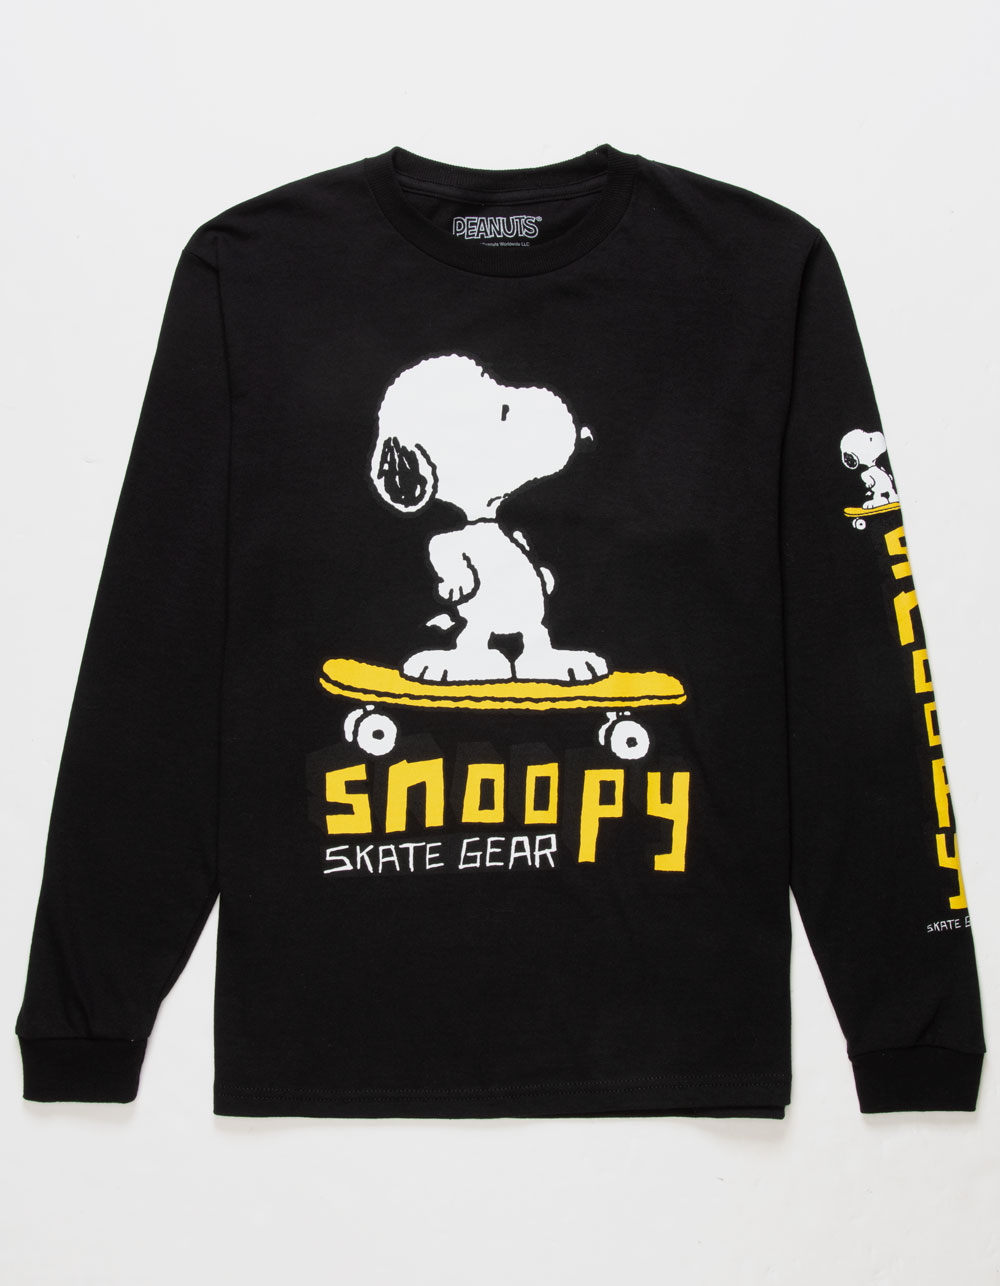 Peanuts Snoopy Skate Gear Boys Long Sleeve Tee - Black - Medium